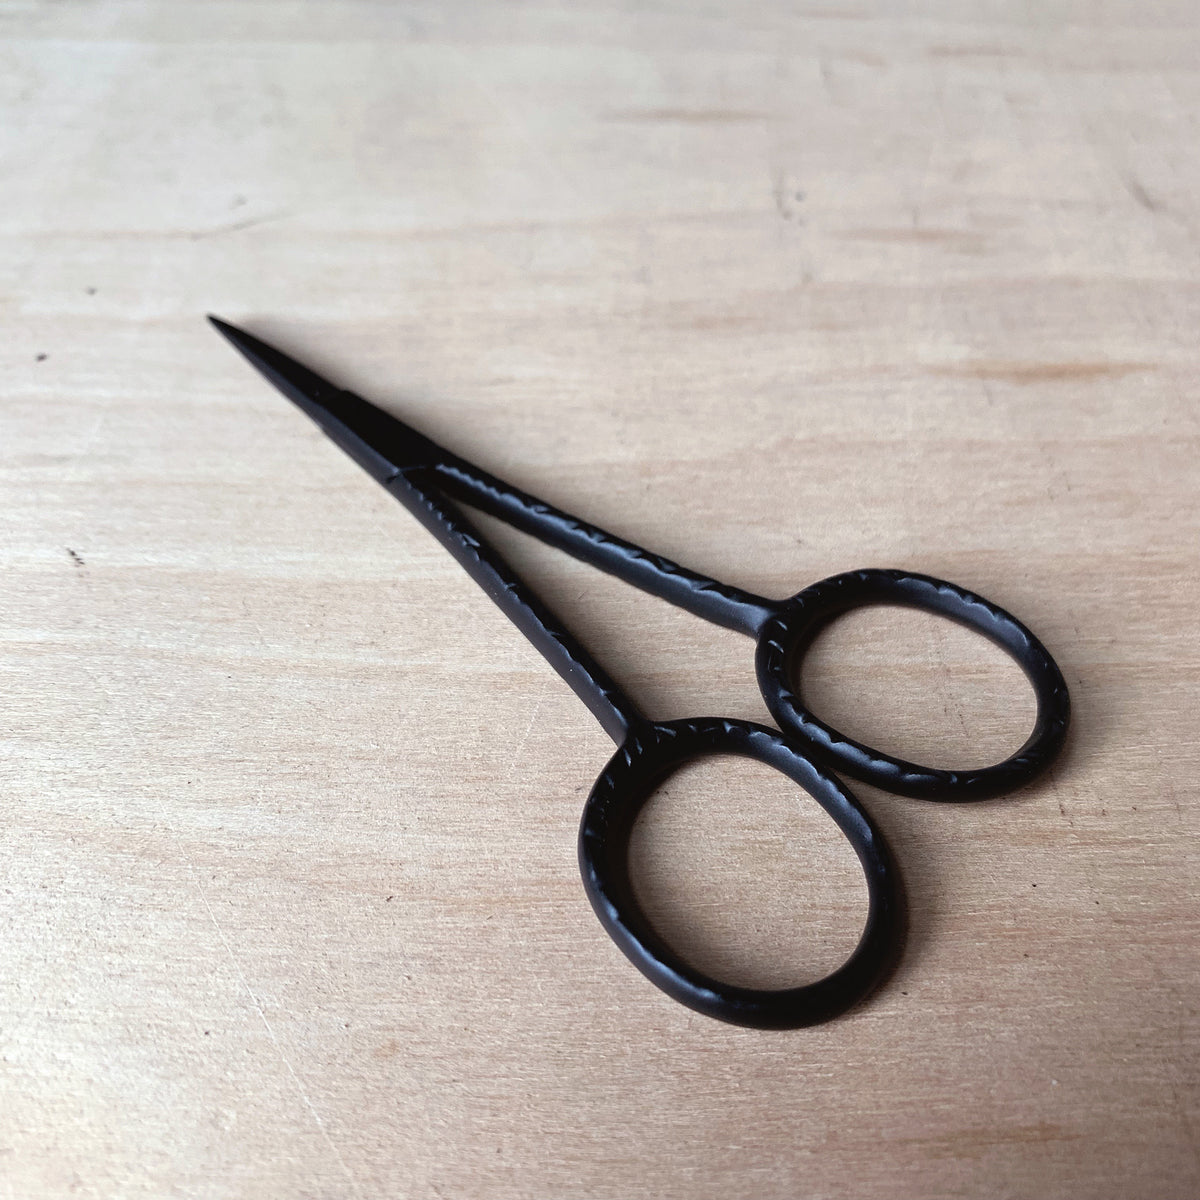 Miniature Storklette Scissors, TSA Approved